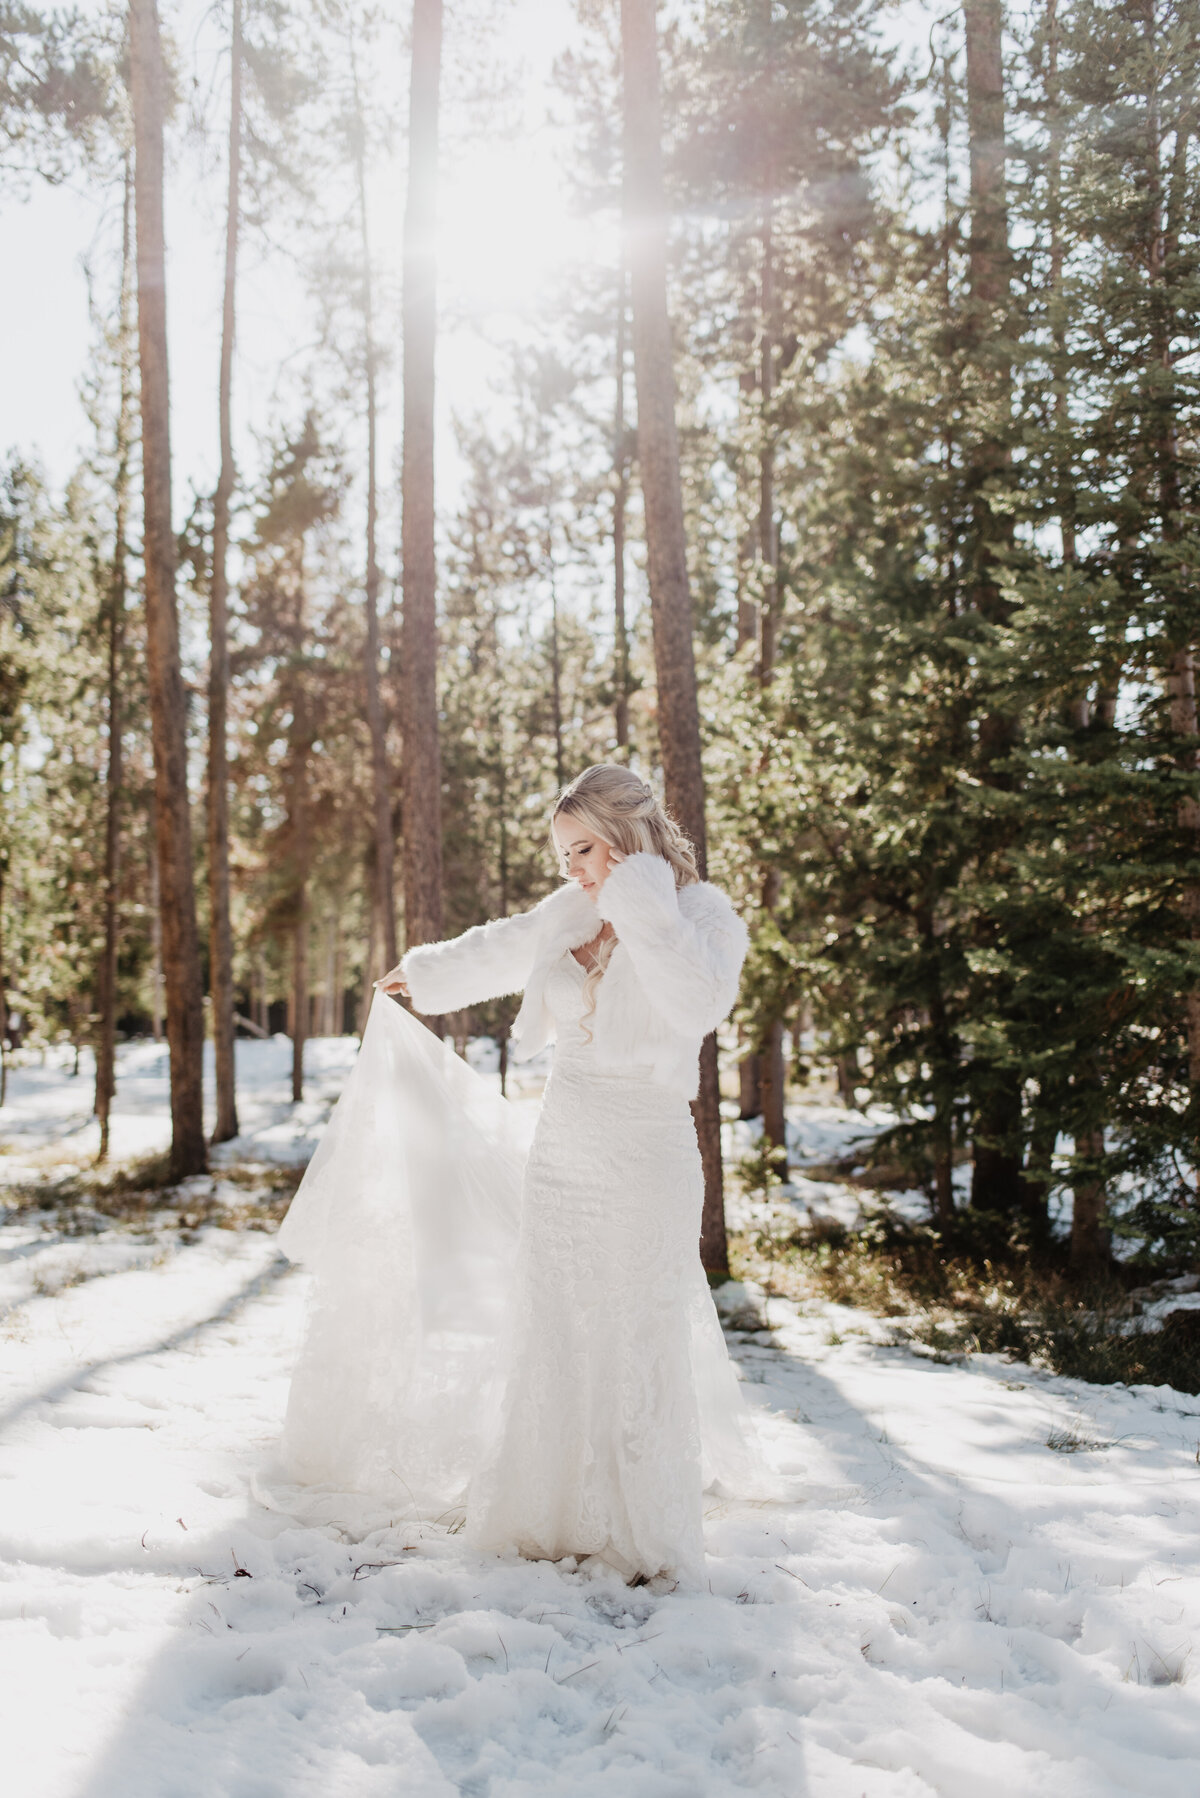 Jackson Hole Photographers capture bride playing with dress